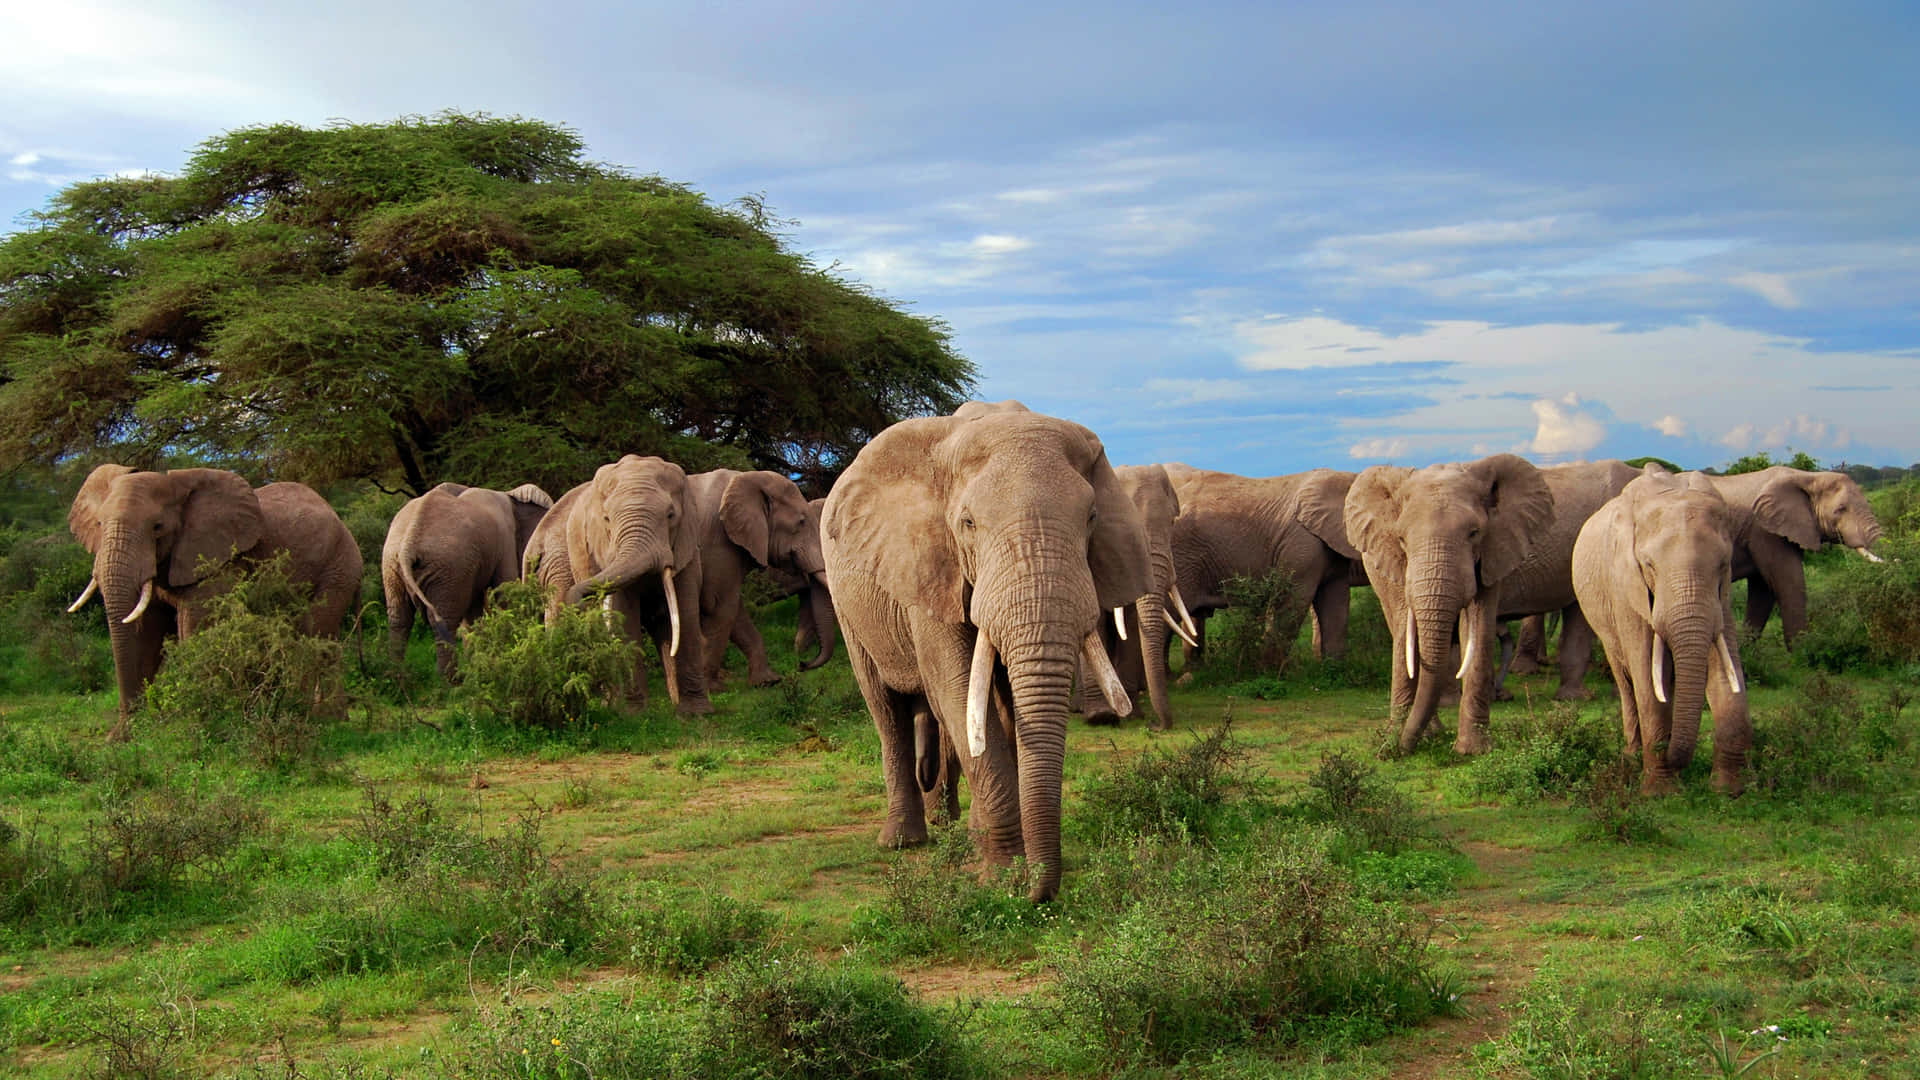 Imagende Paisaje De Un Elefante En La Sabana Africana Para Fondo De Pantalla De Computadora O Móvil